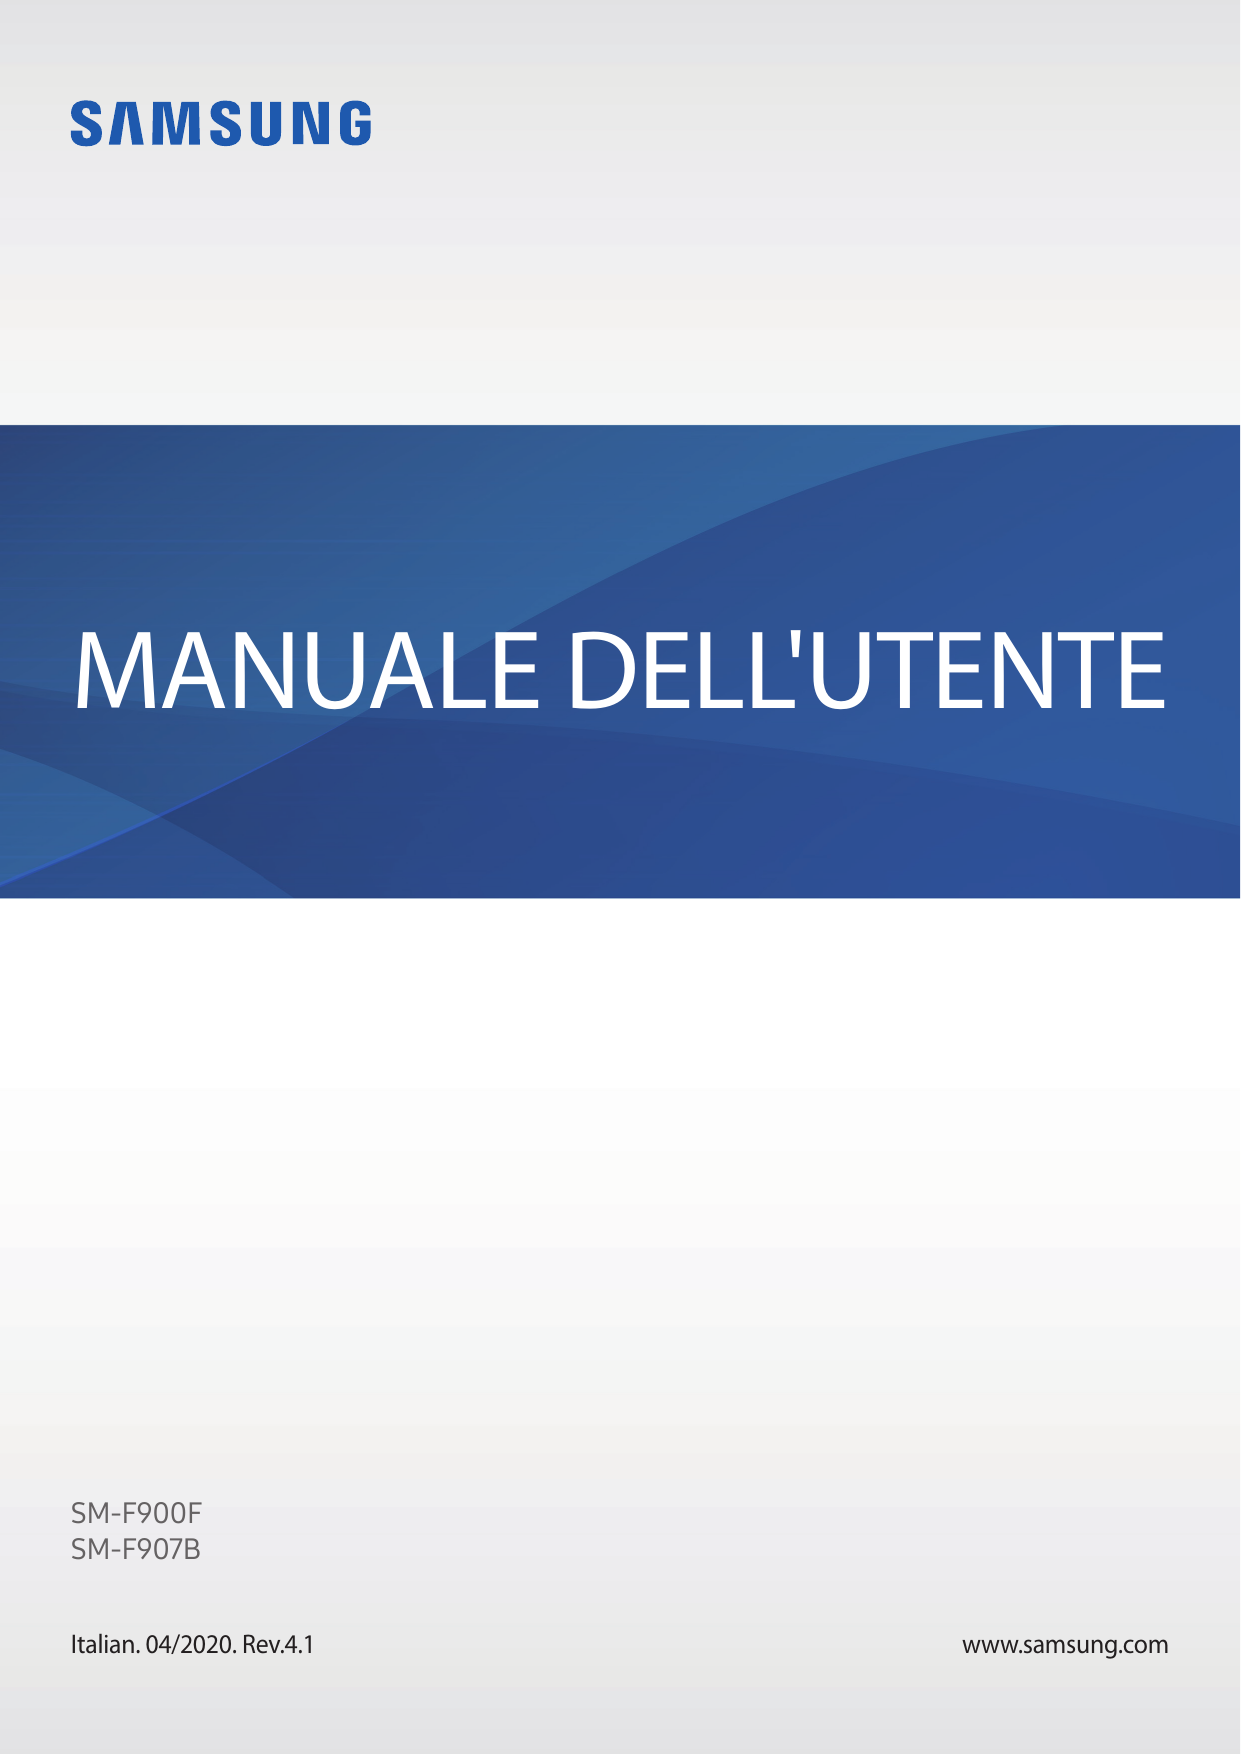 MANUALE DELL'UTENTESM-F900FSM-F907BItalian. 04/2020. Rev.4.1www.samsung.com